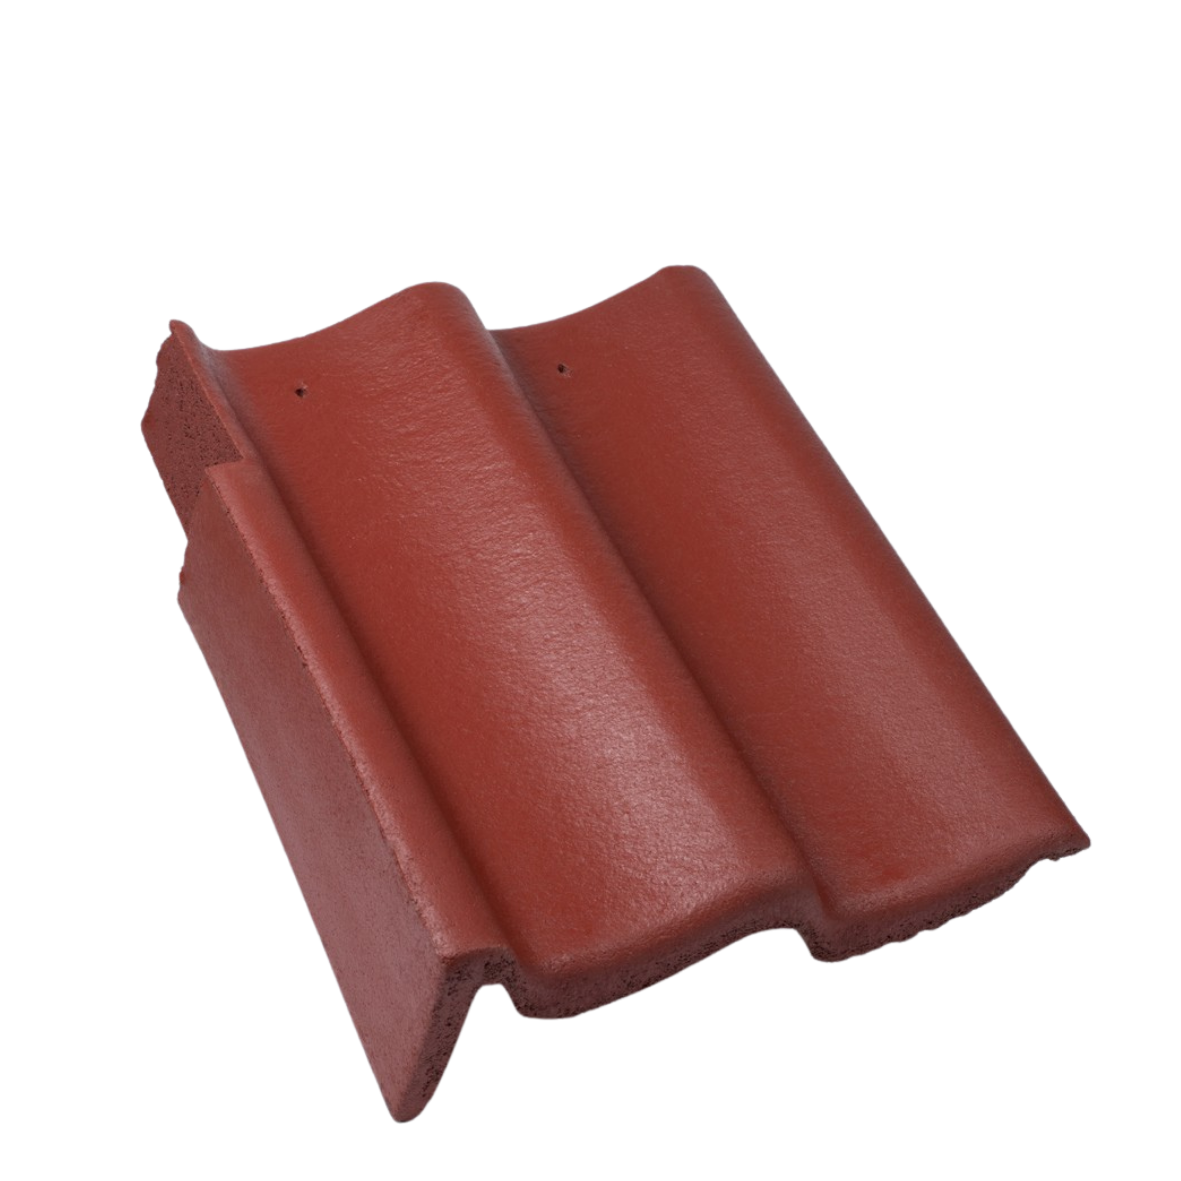 Tigla beton si accesorii - Tigla laterala de stanga Nova rosu coral 420 x 330 mm, https:maxbau.ro